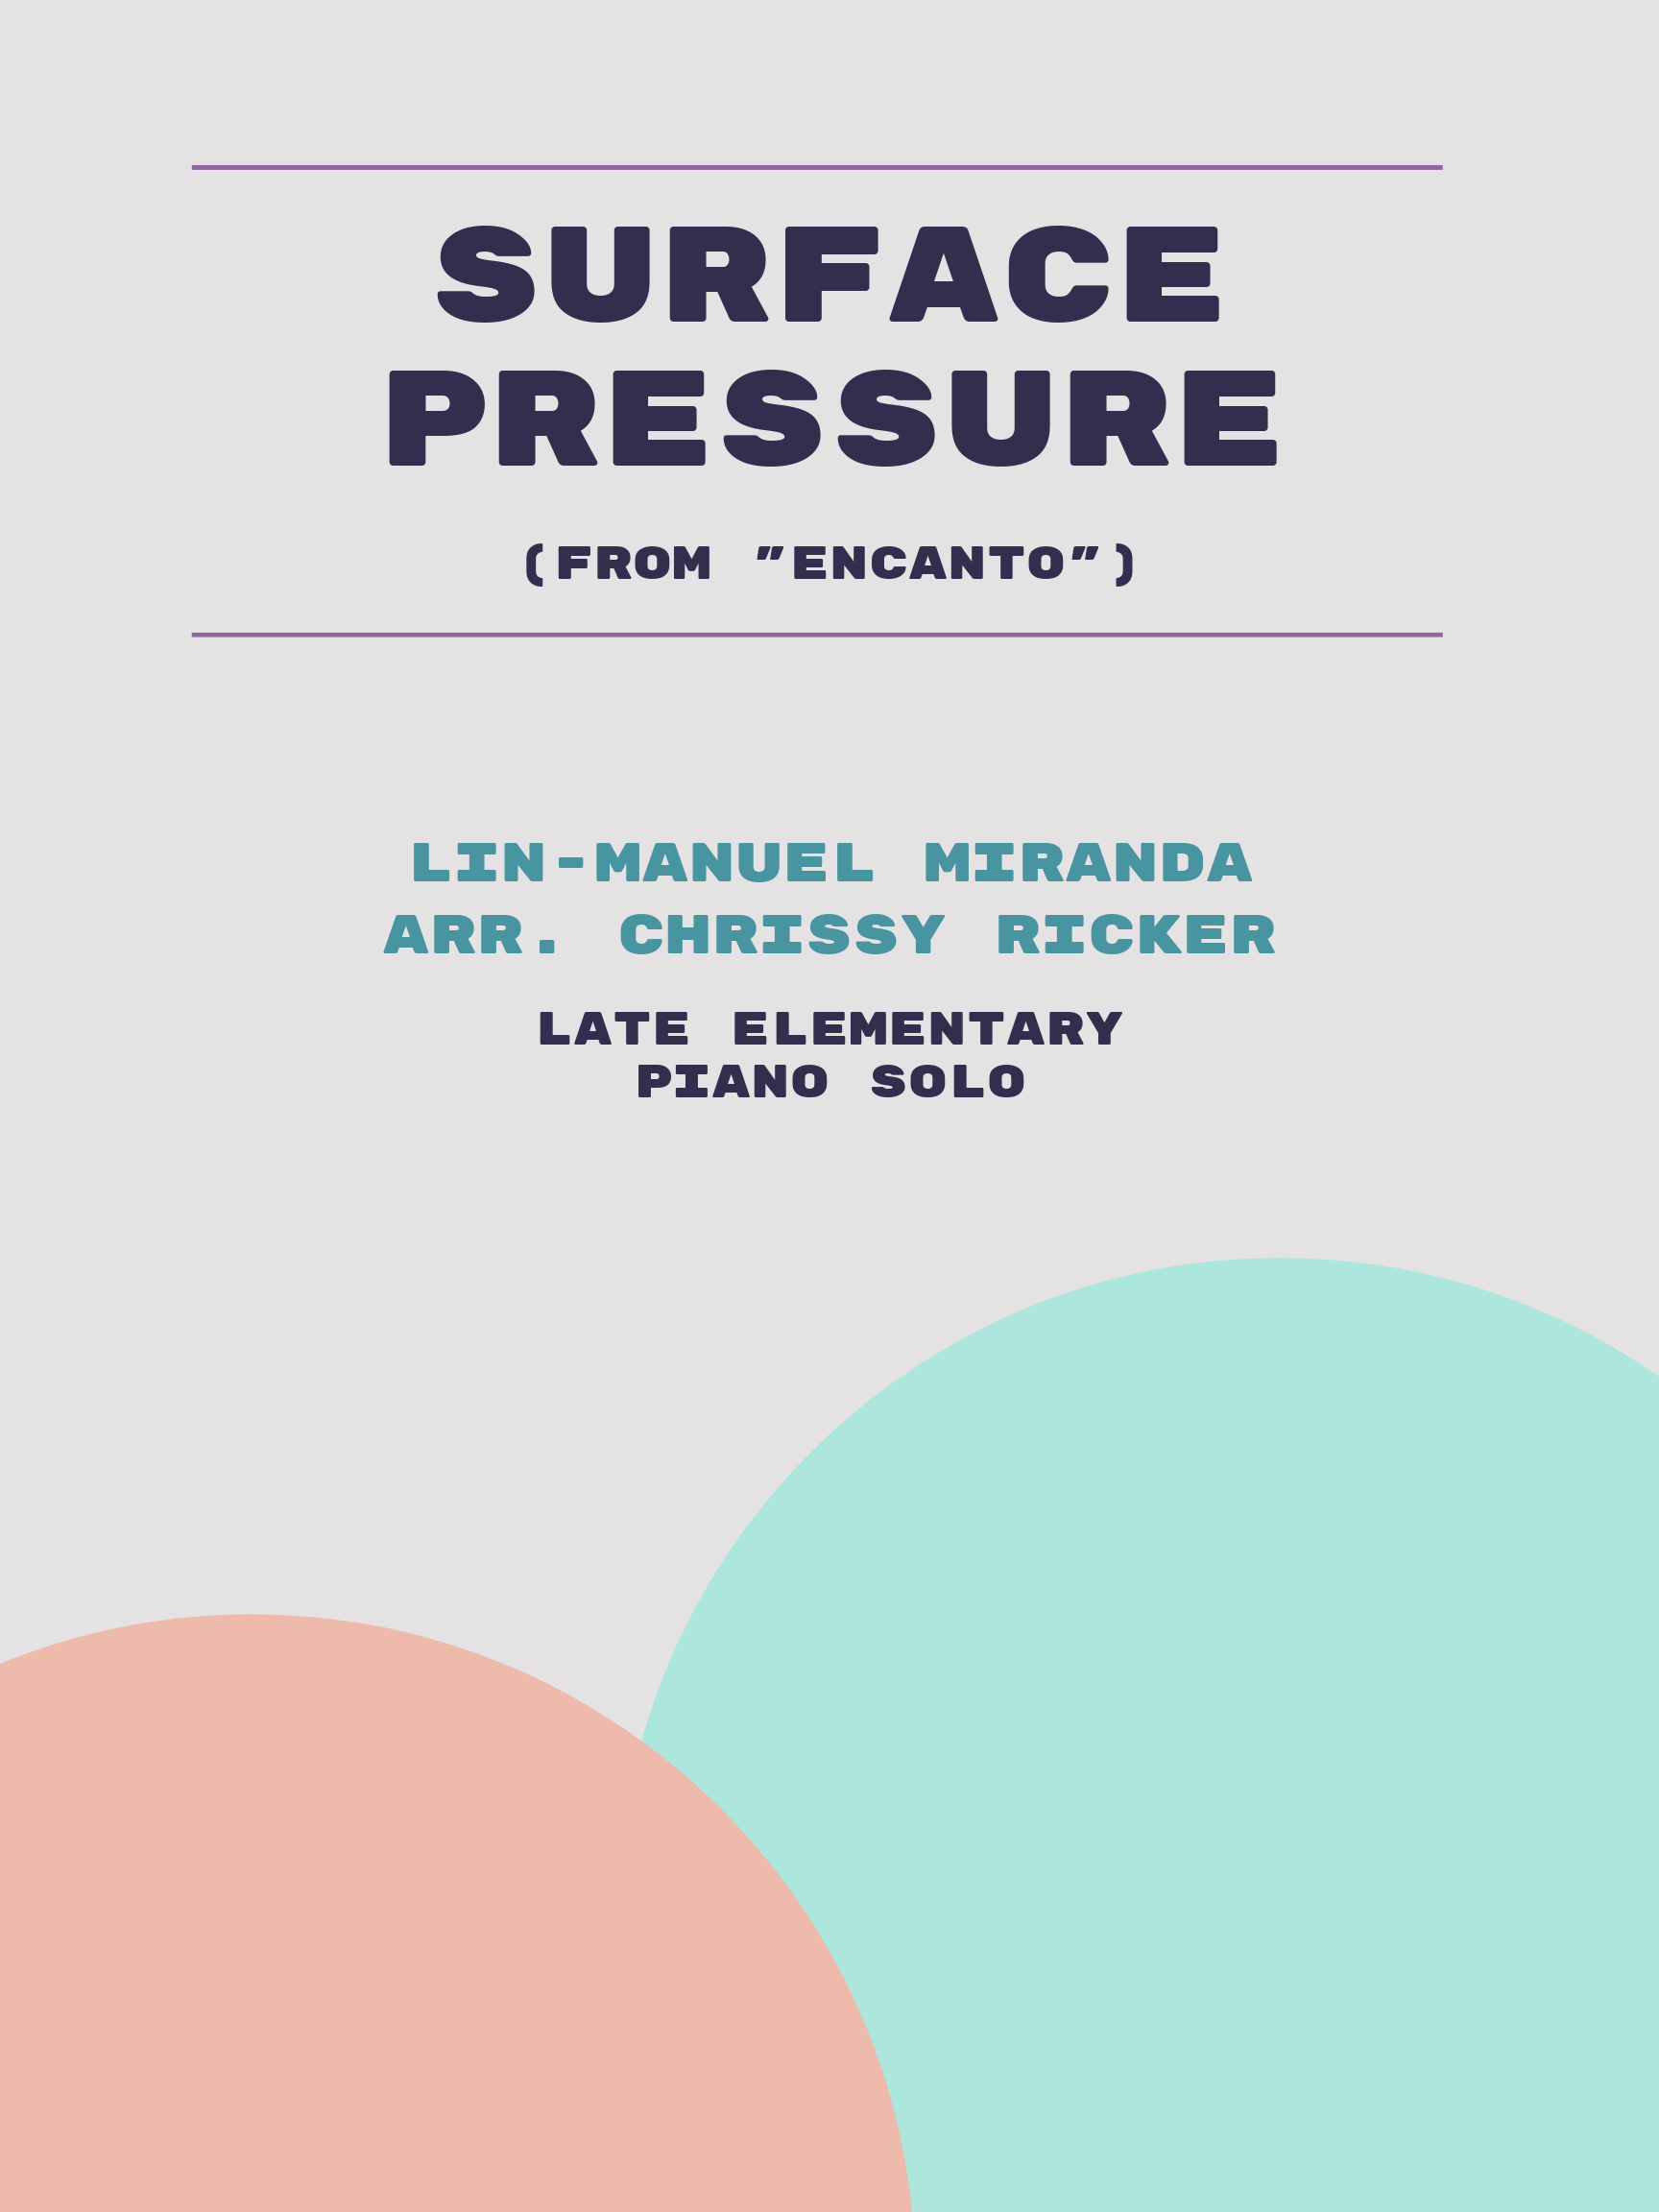 Surface Pressure by Lin-Manuel Miranda